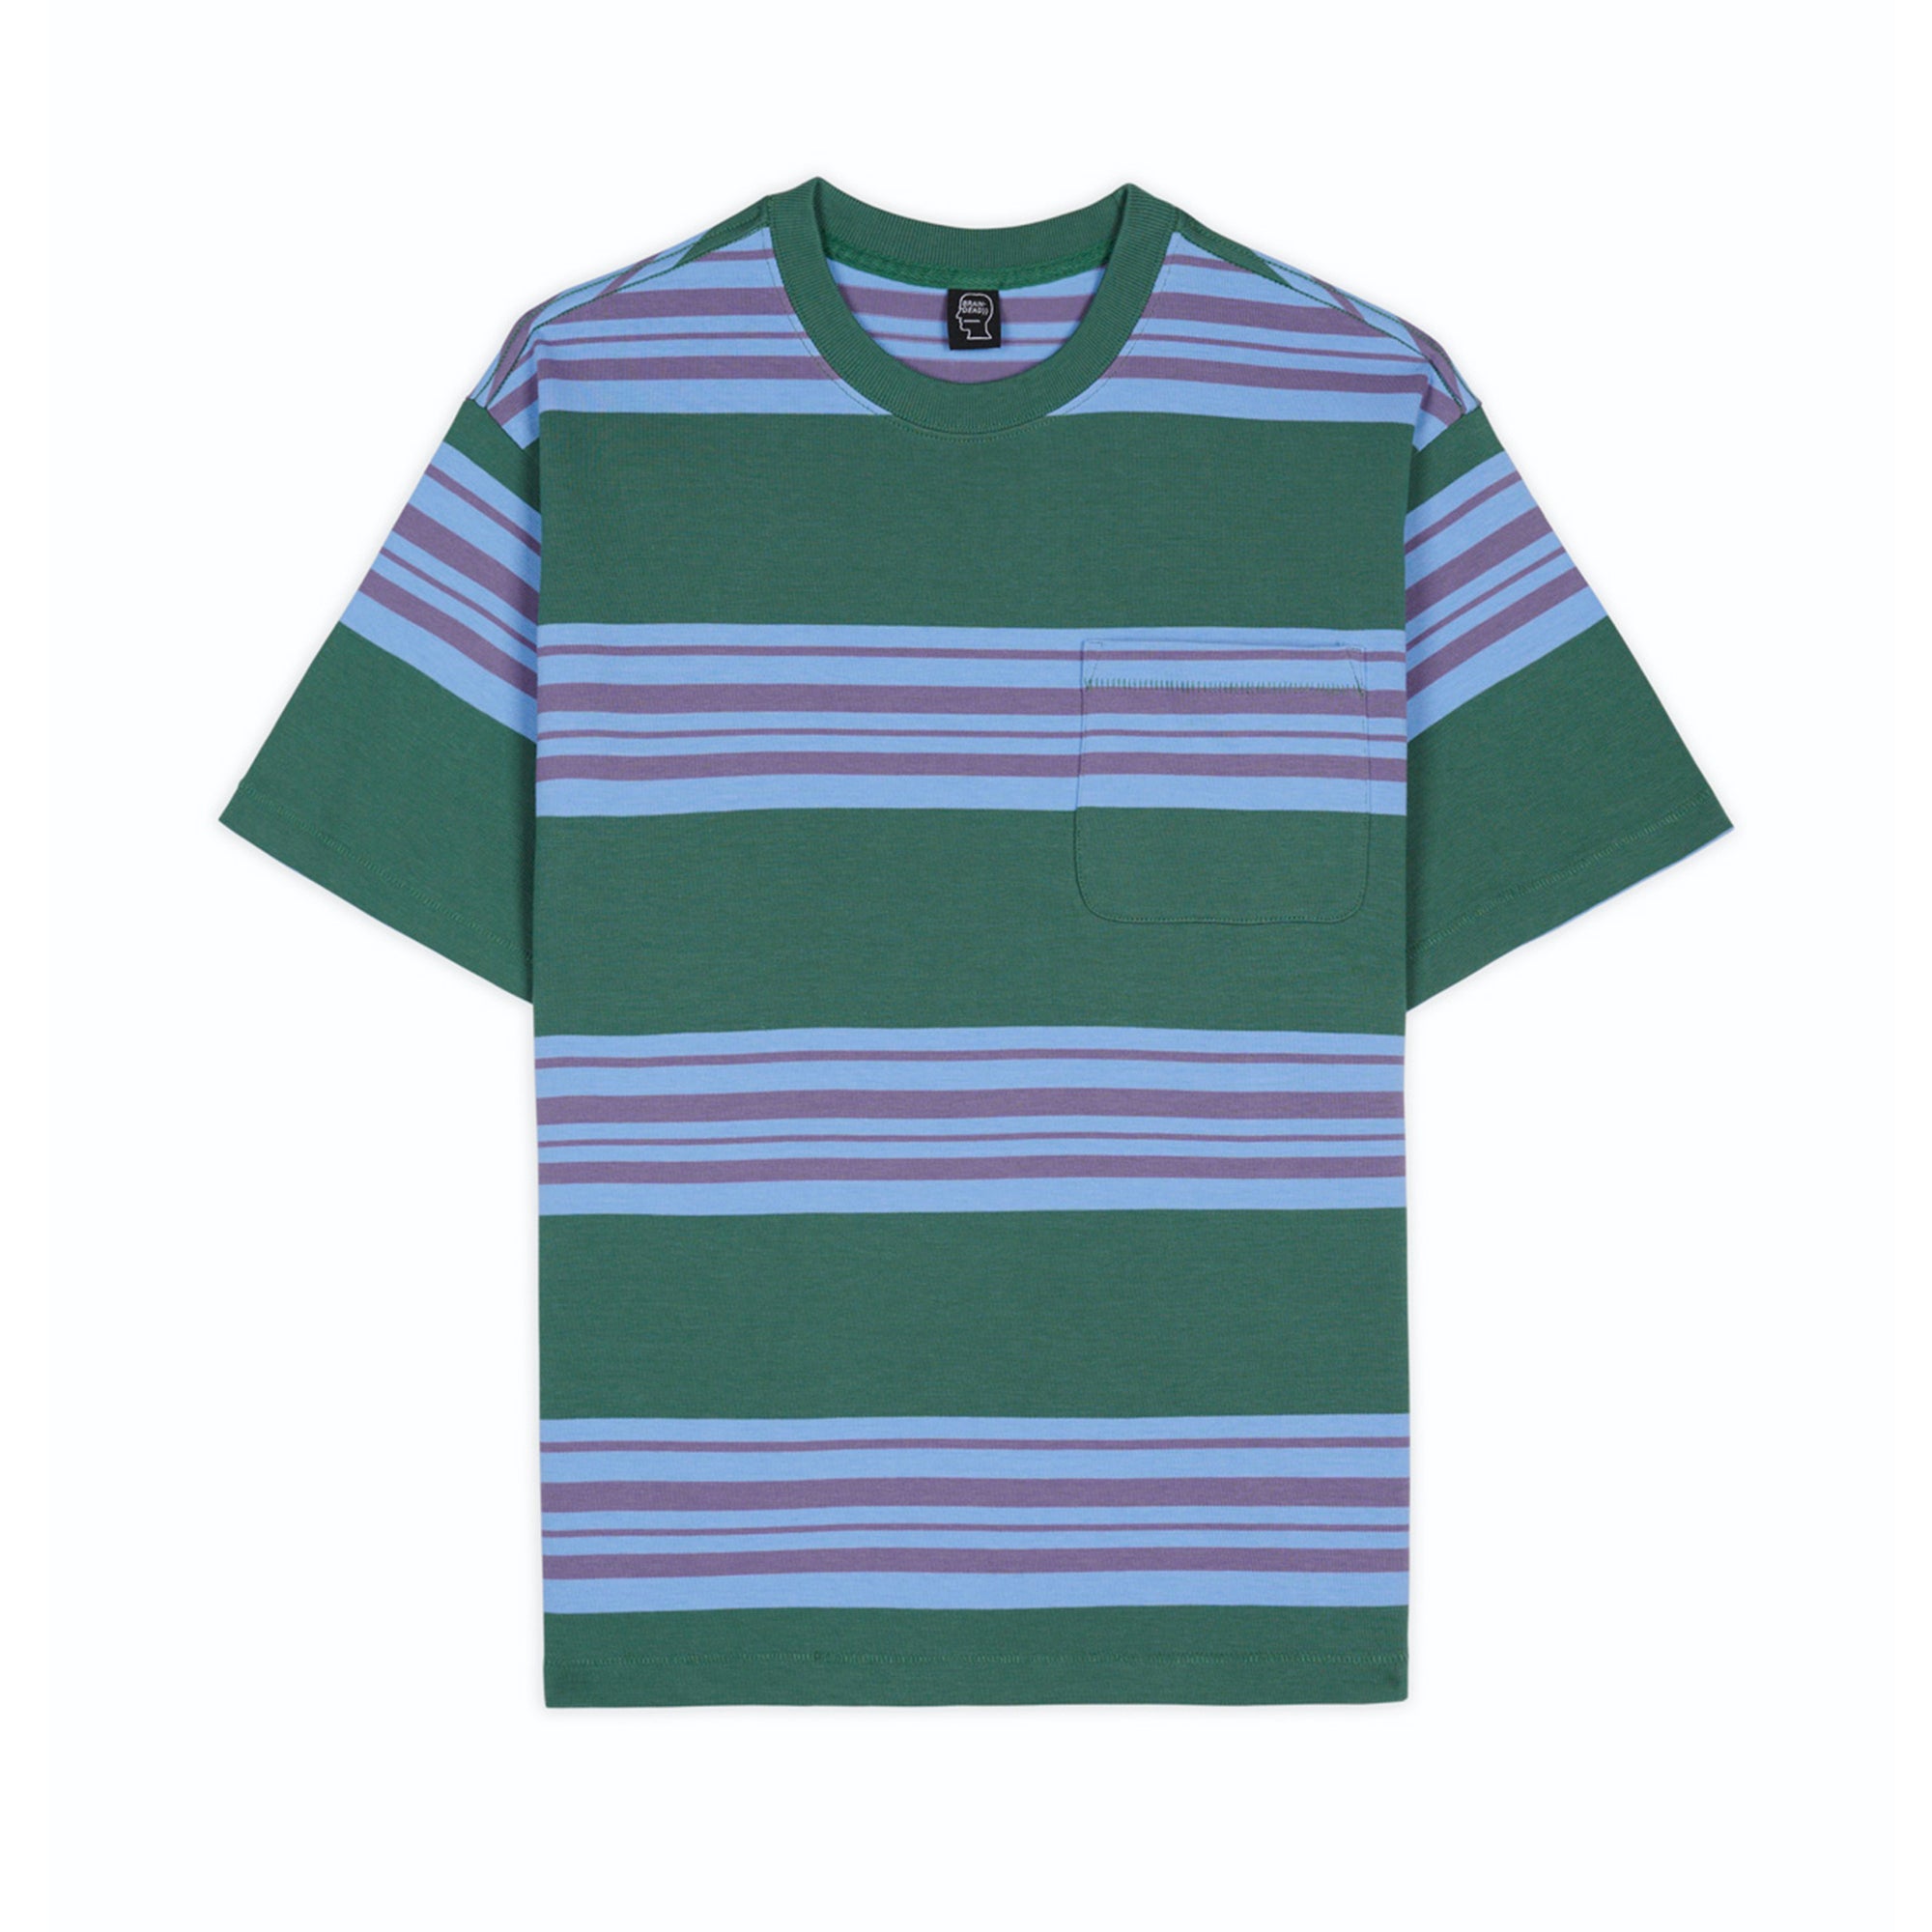 Brain Dead - Men's Baker Striped Pocket T-Shirt - (Green) view 1